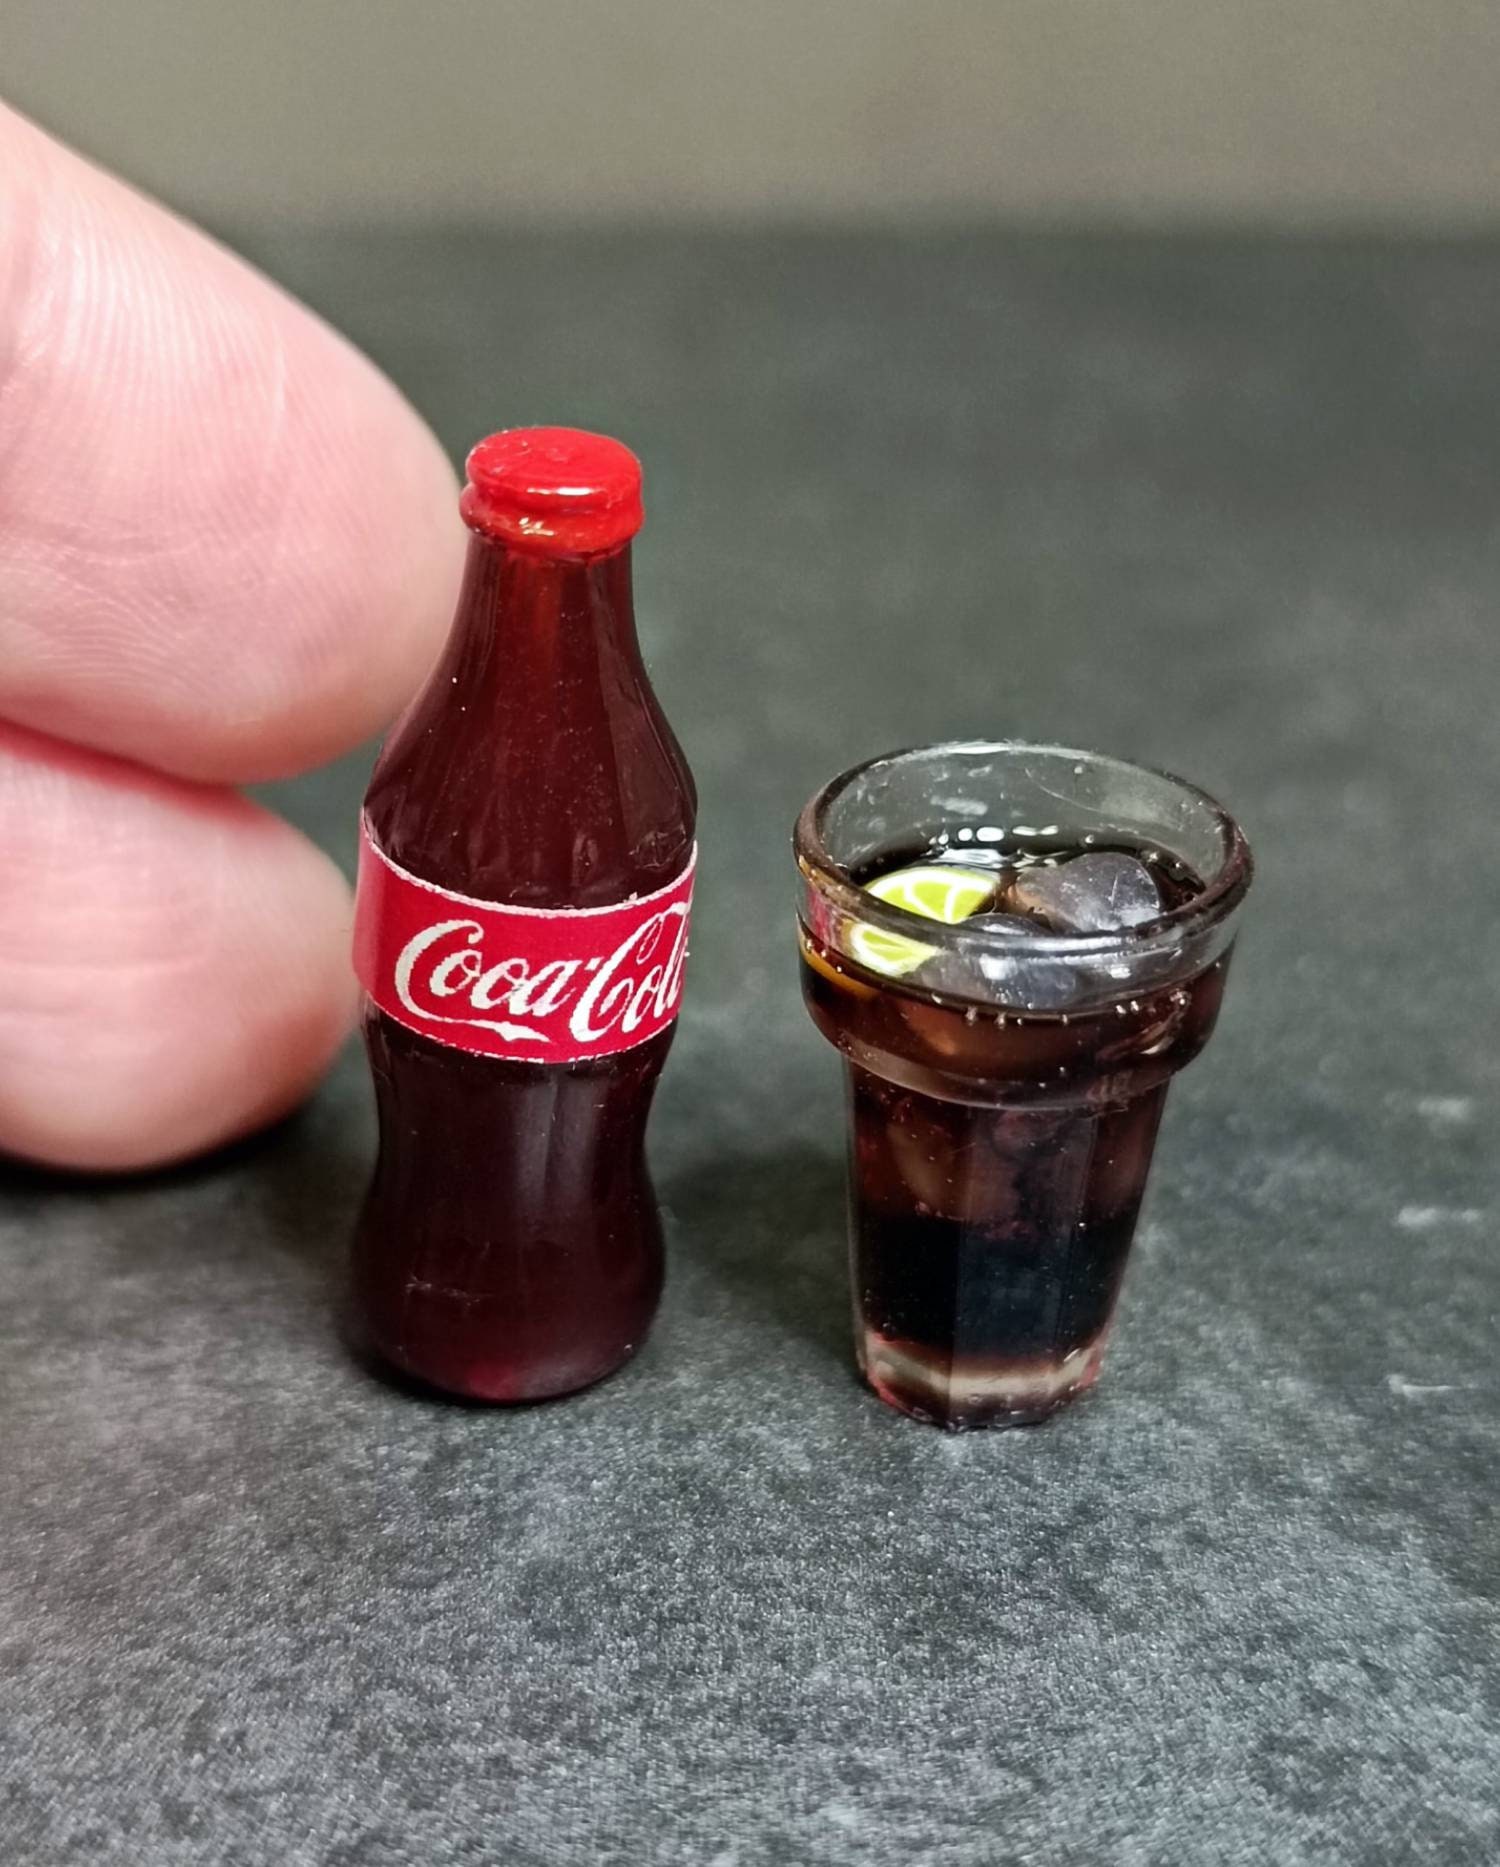 Coca Cola Original Mini 12 x 0,15l 1,8 L EINWEG online kaufen